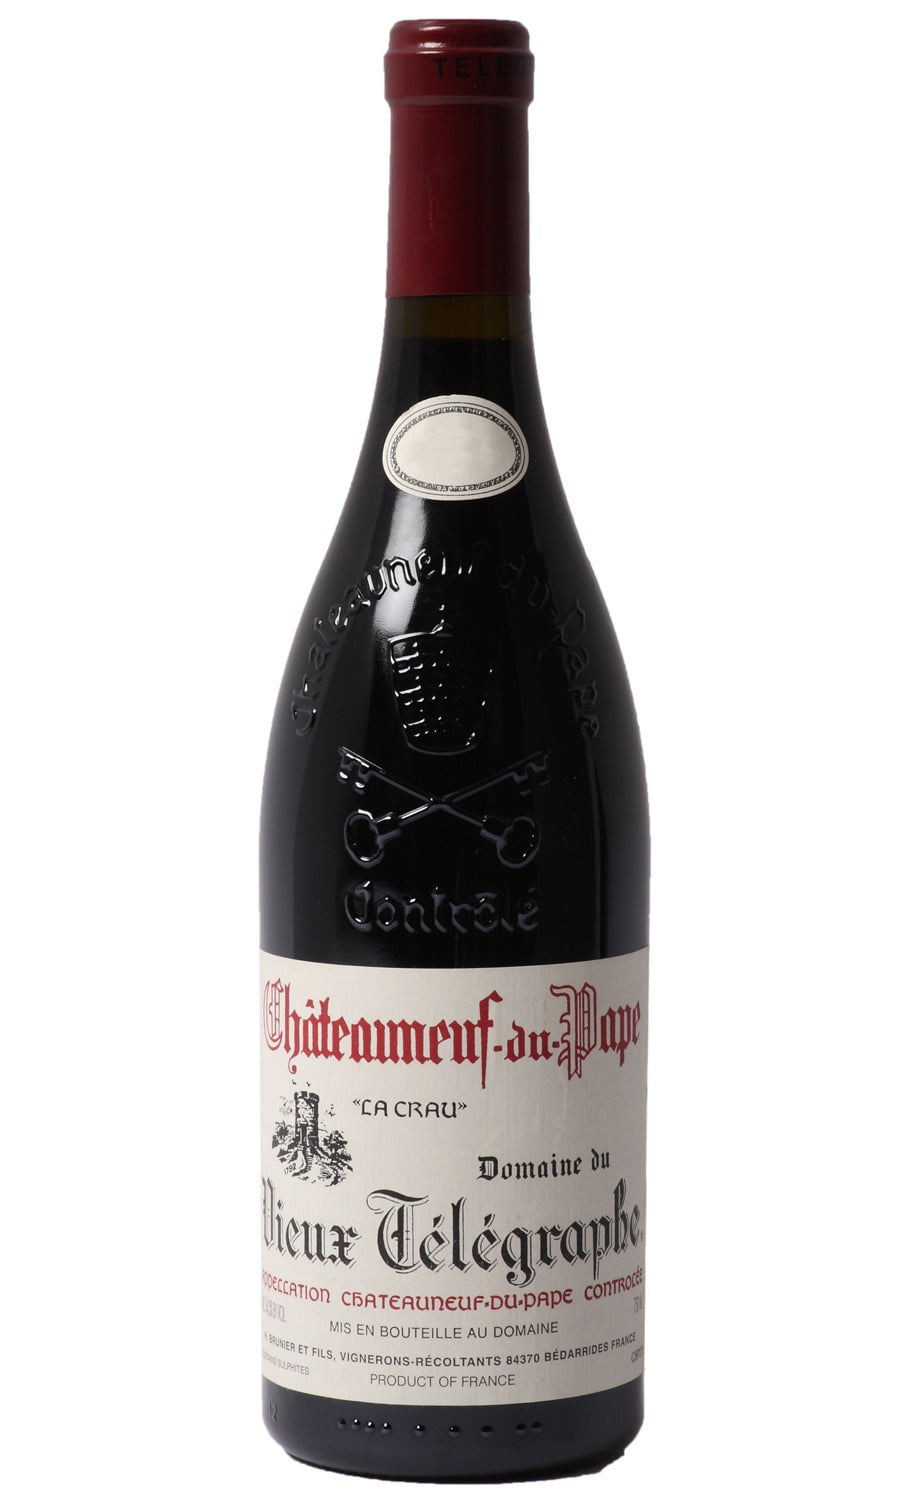 International Wine Vieux Telegraphe Chateauneuf du pape